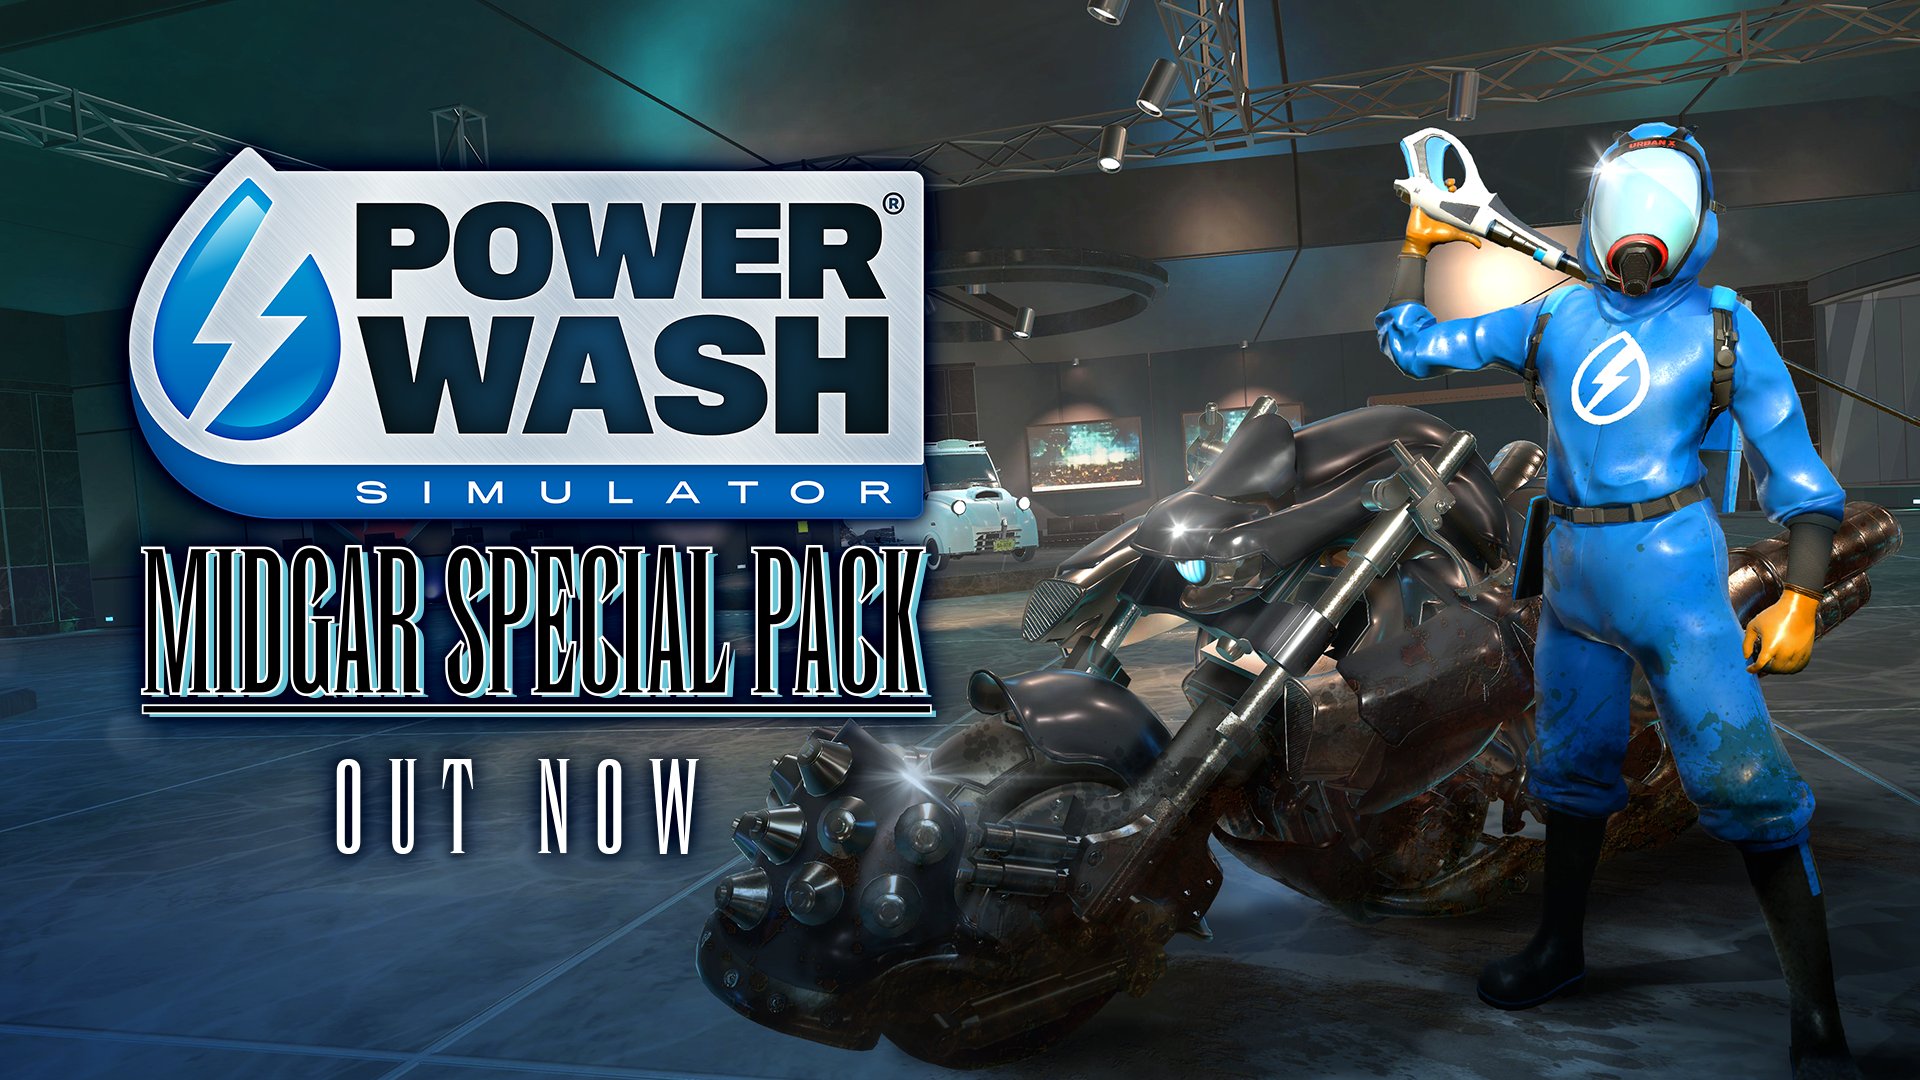 PowerWash Simulator เผย DLC ใหม่จาก FFVII ได้เวลาเช็ดล้างเมือง Midgar!